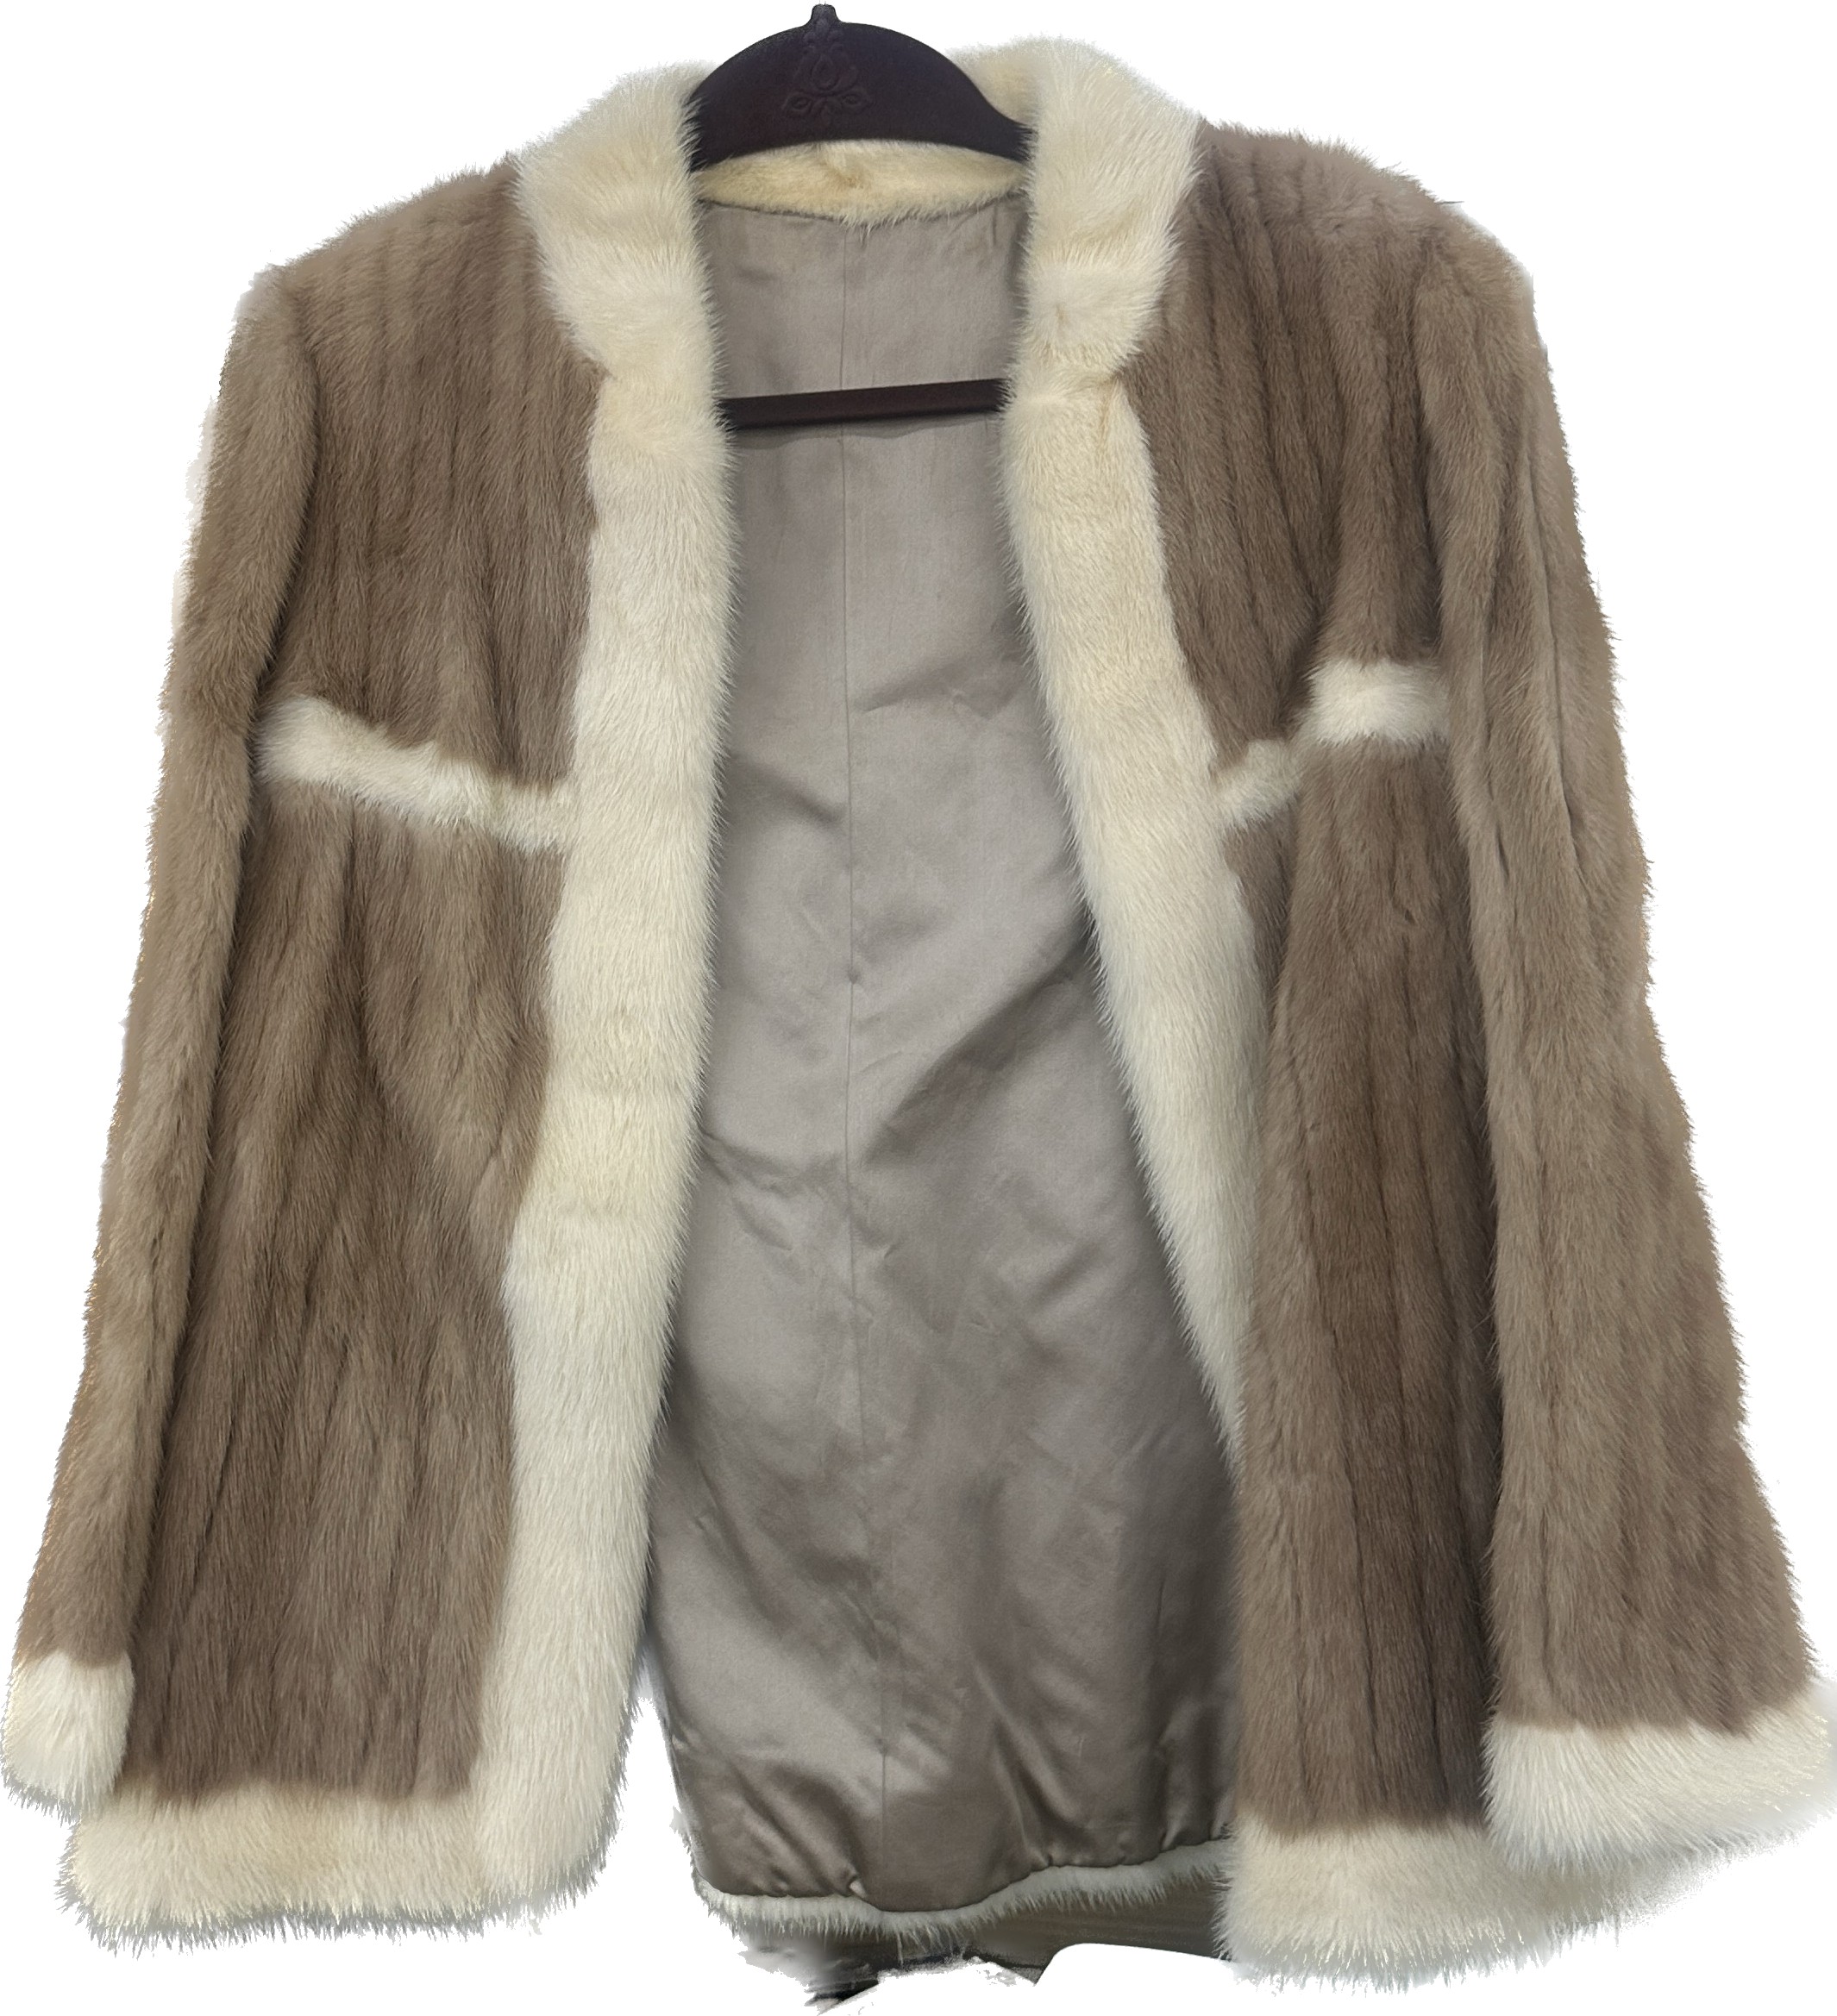 Ladies vintage Mink coat, guessimate size 10/M - Image 2 of 3